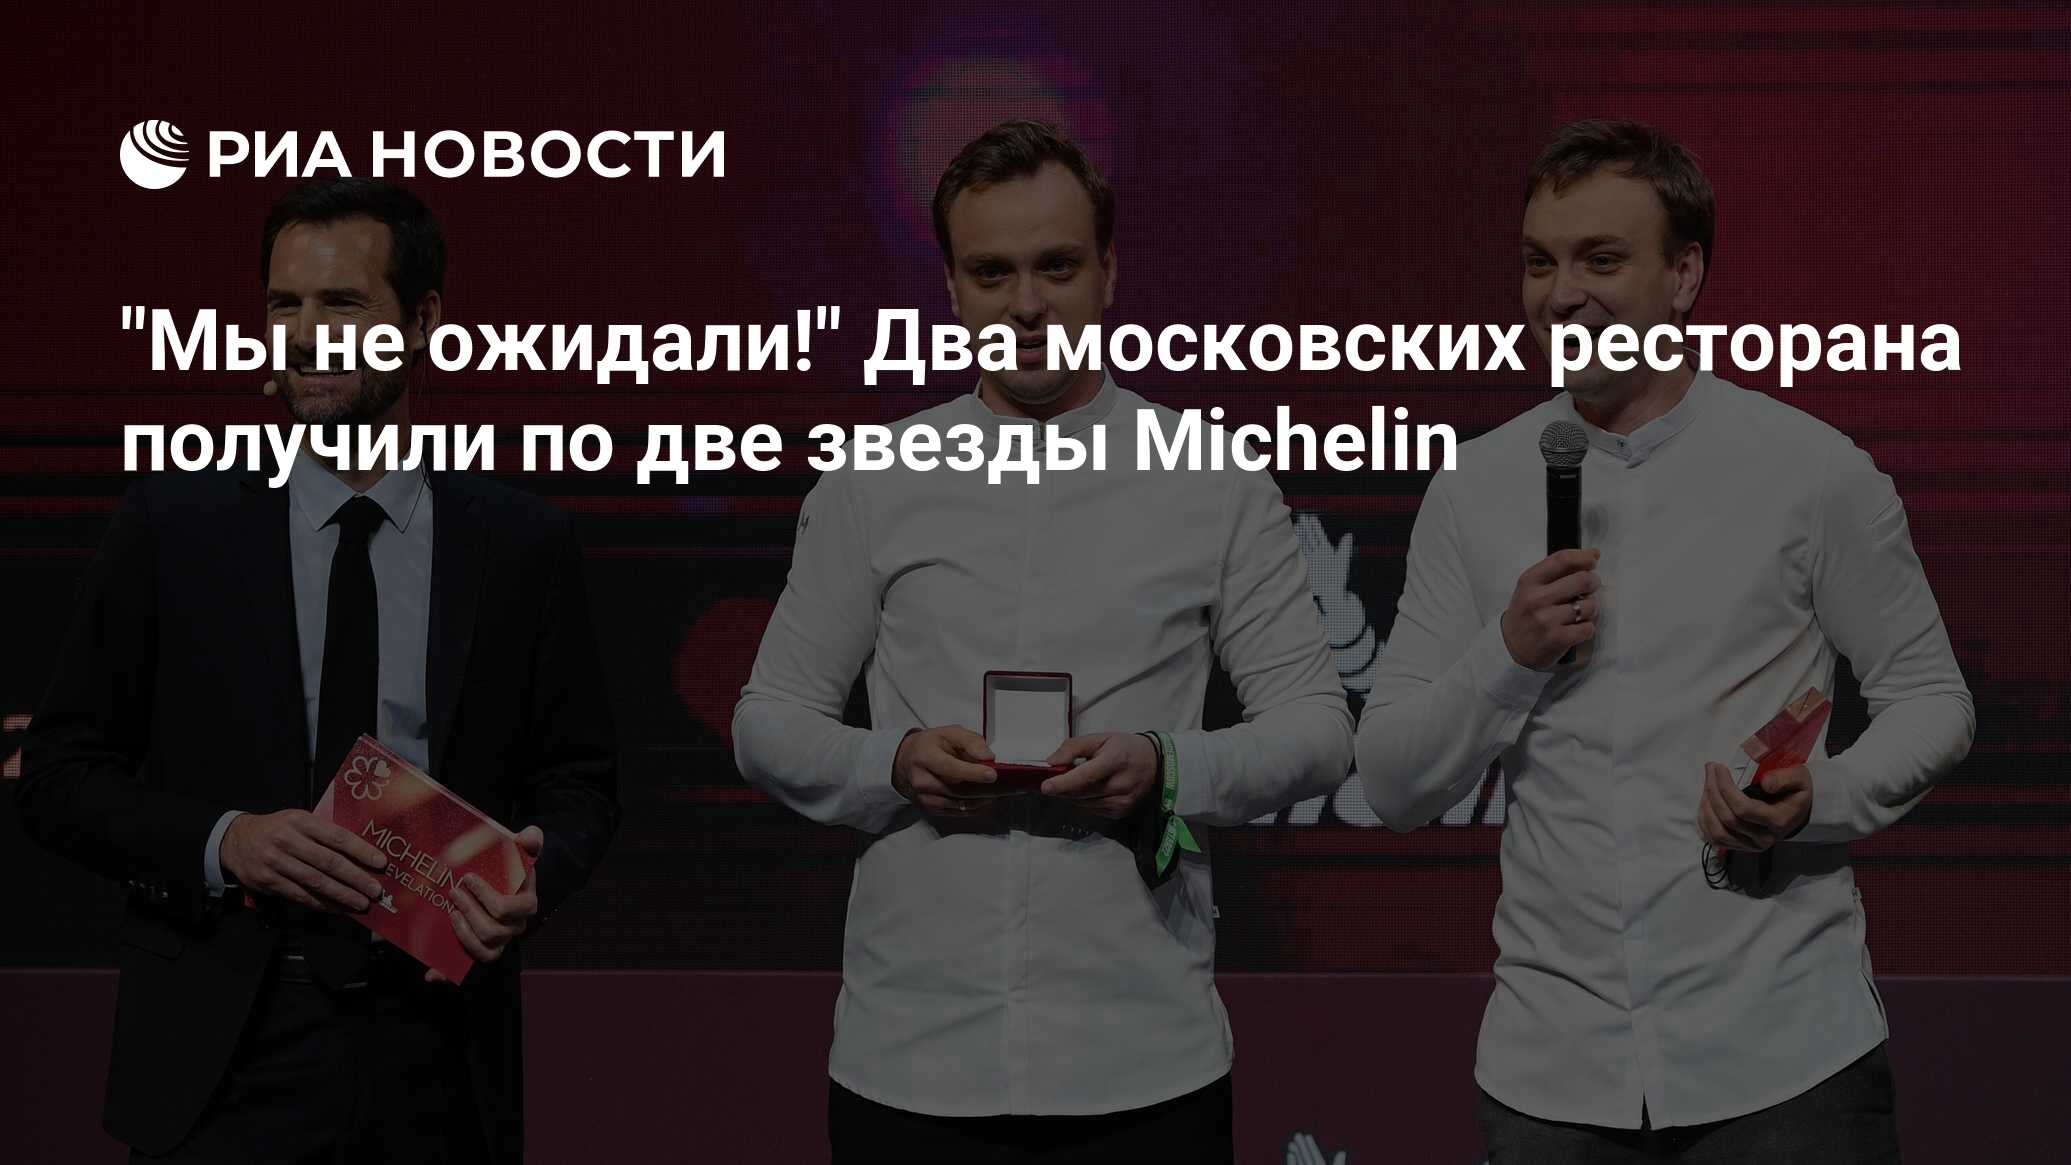 "Мы не ожидали!" Два московских ресторана получили по две звезды Michelin  - РИА Новости, 15.10.2021